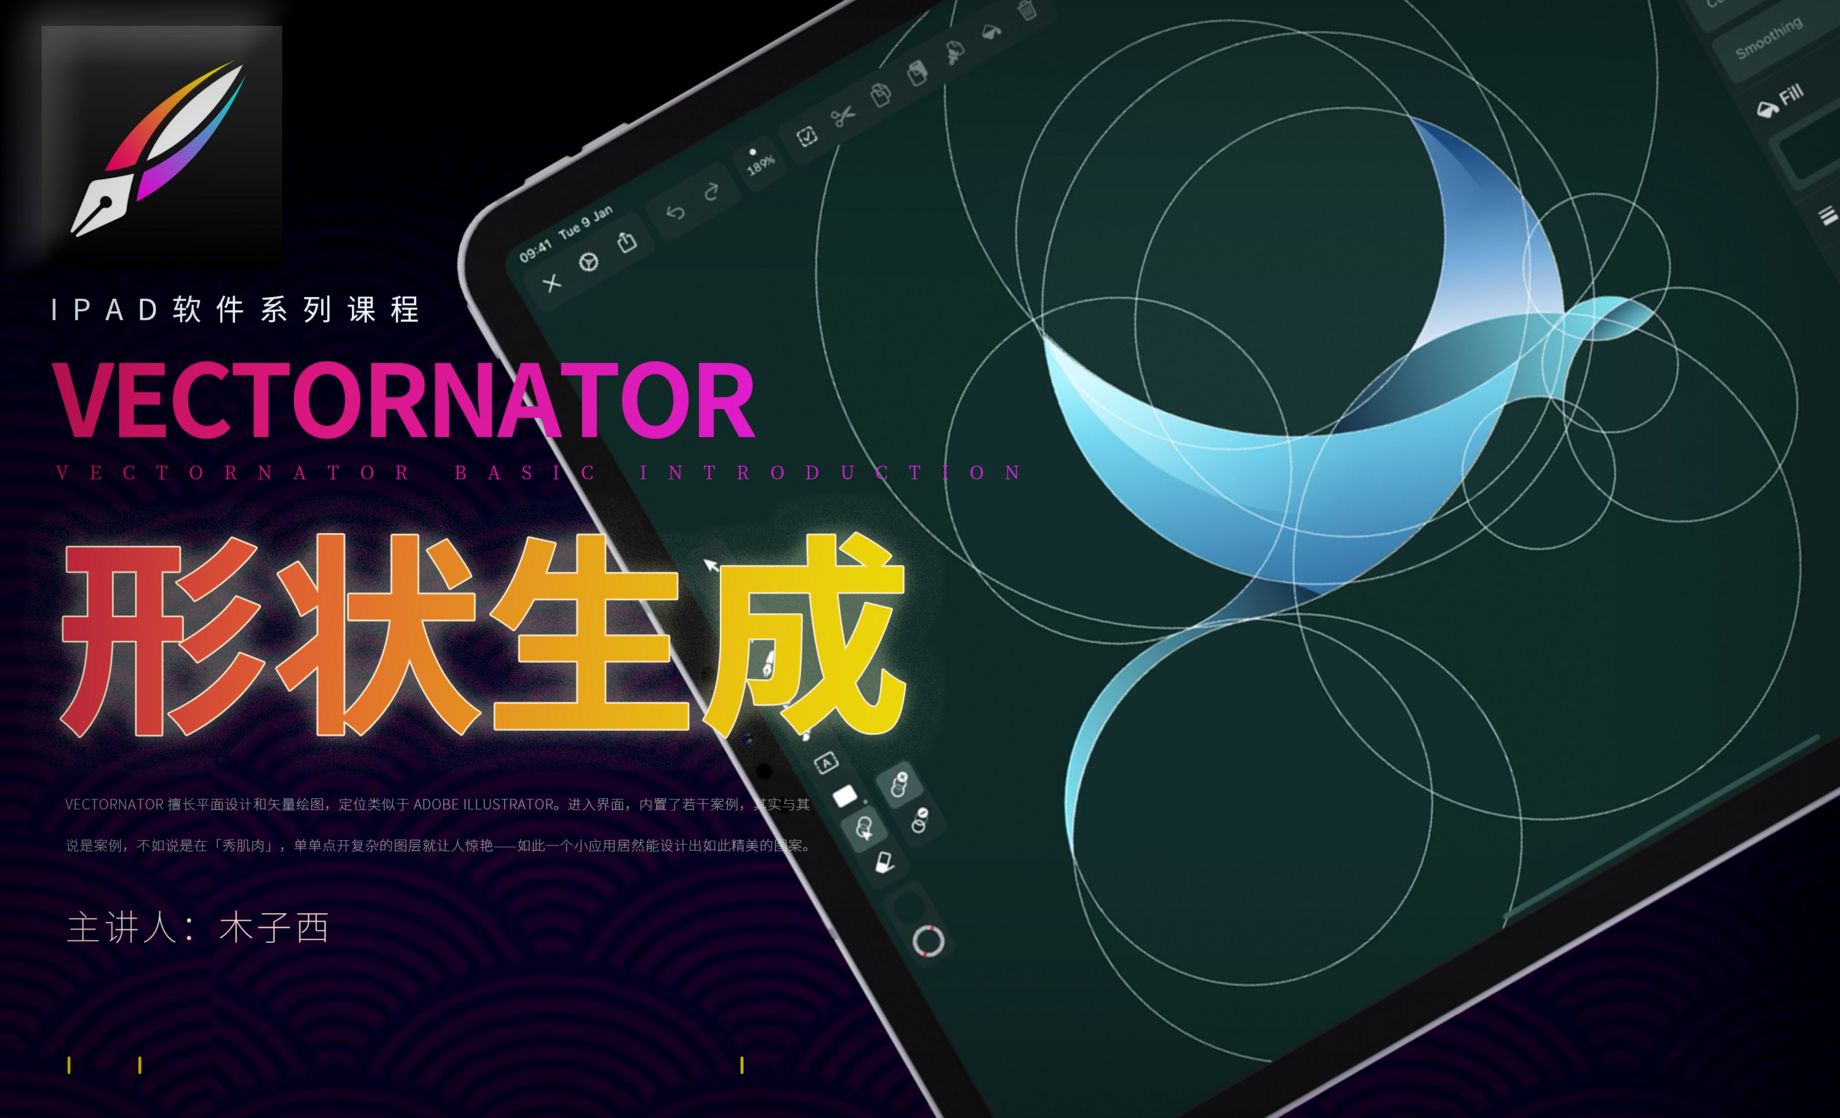 iPad Vectornator软件基础-形状生成